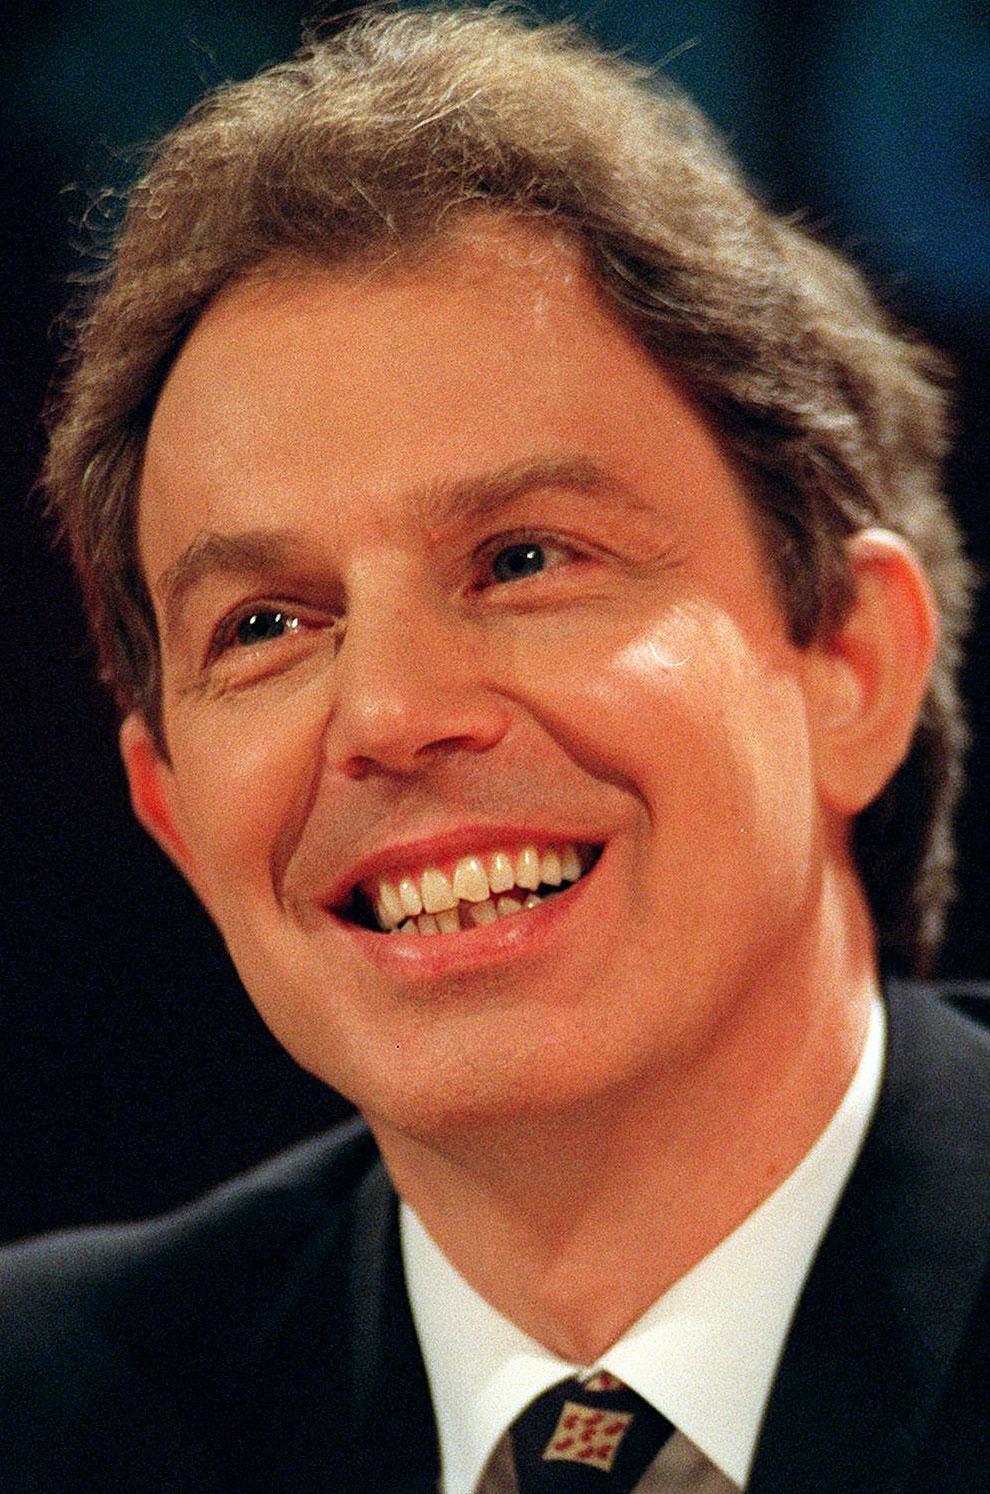 Tony Blair på 90-talet.